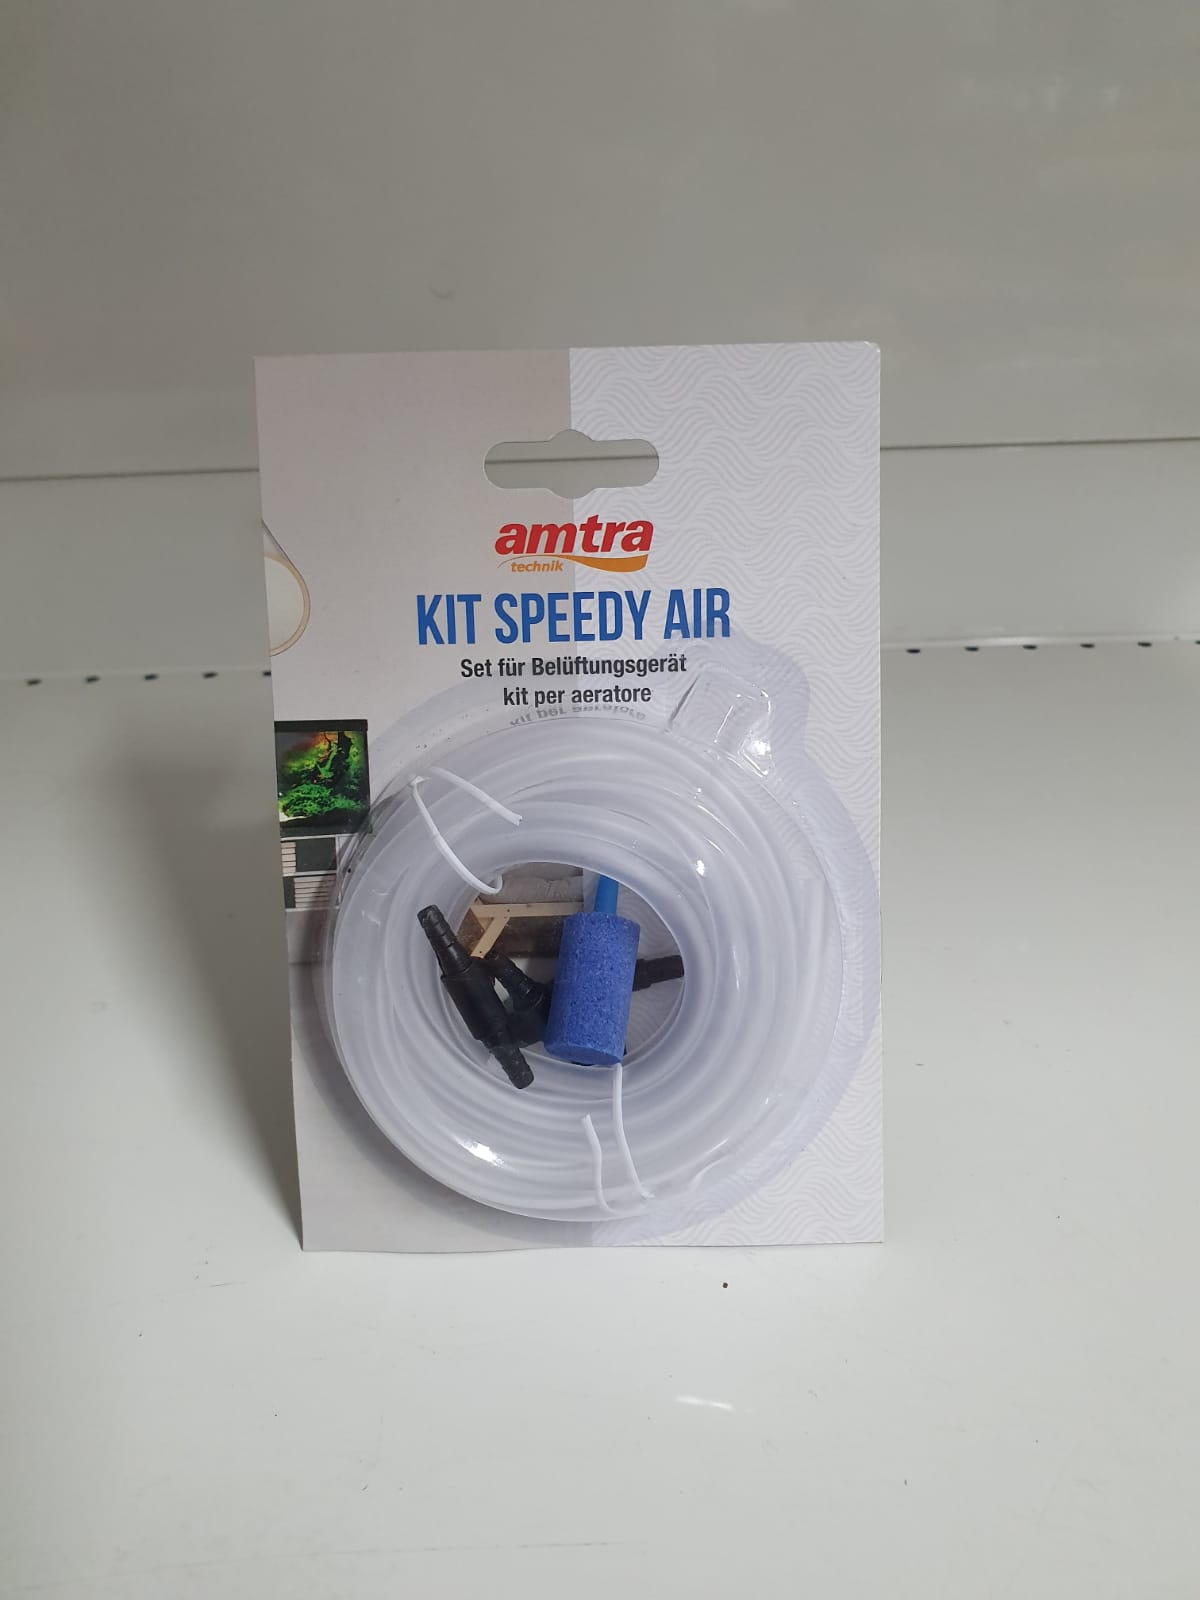 kit speedy air kit per aeratore